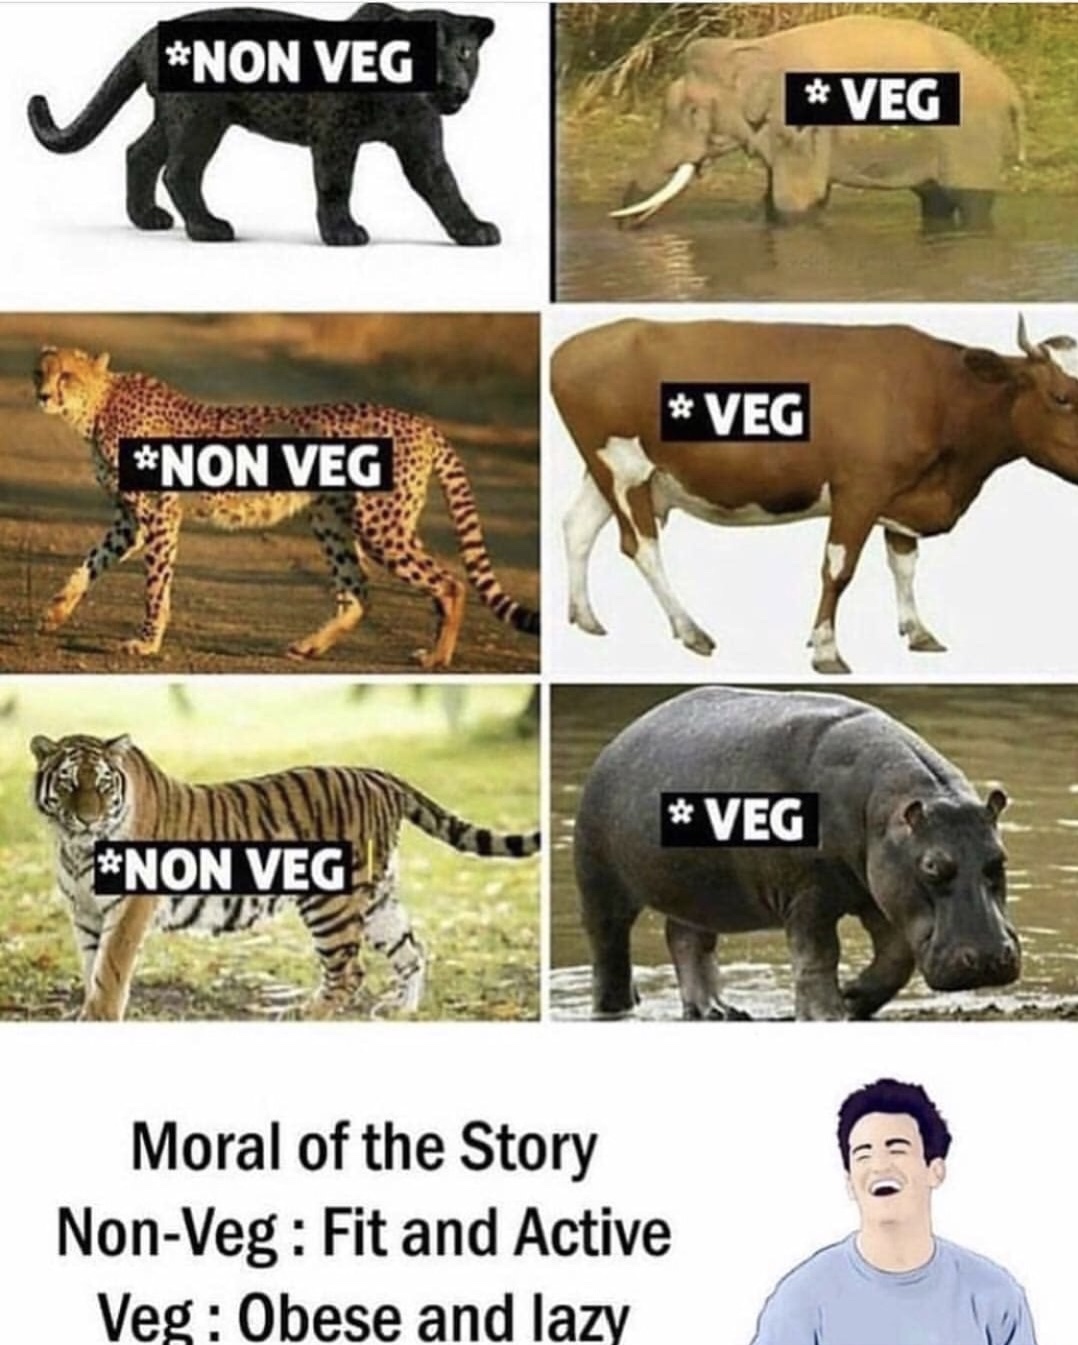 memes - veg vs non veg - Non Veg S Evec Veg Veg Non Veg Veg Non Vegi Vata Moral of the Story NonVeg Fit and Active Veg Obese and lazy